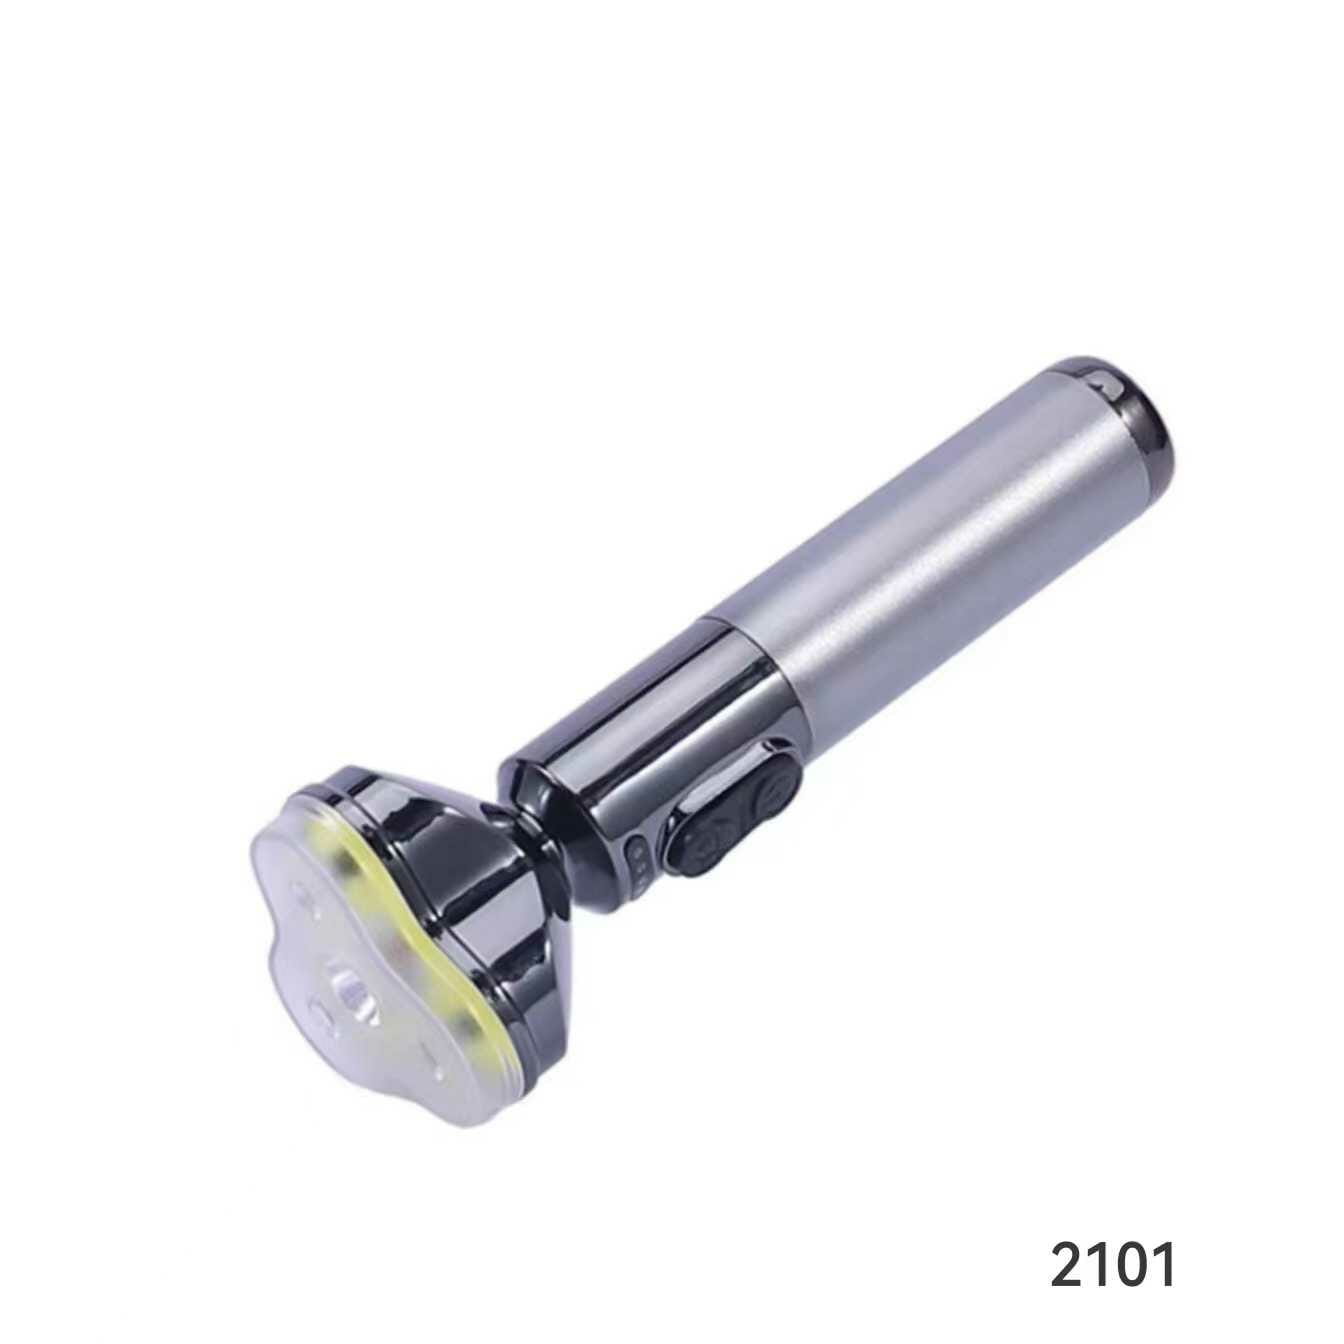 Rechargeable LED flashlight - 2101 - 800177